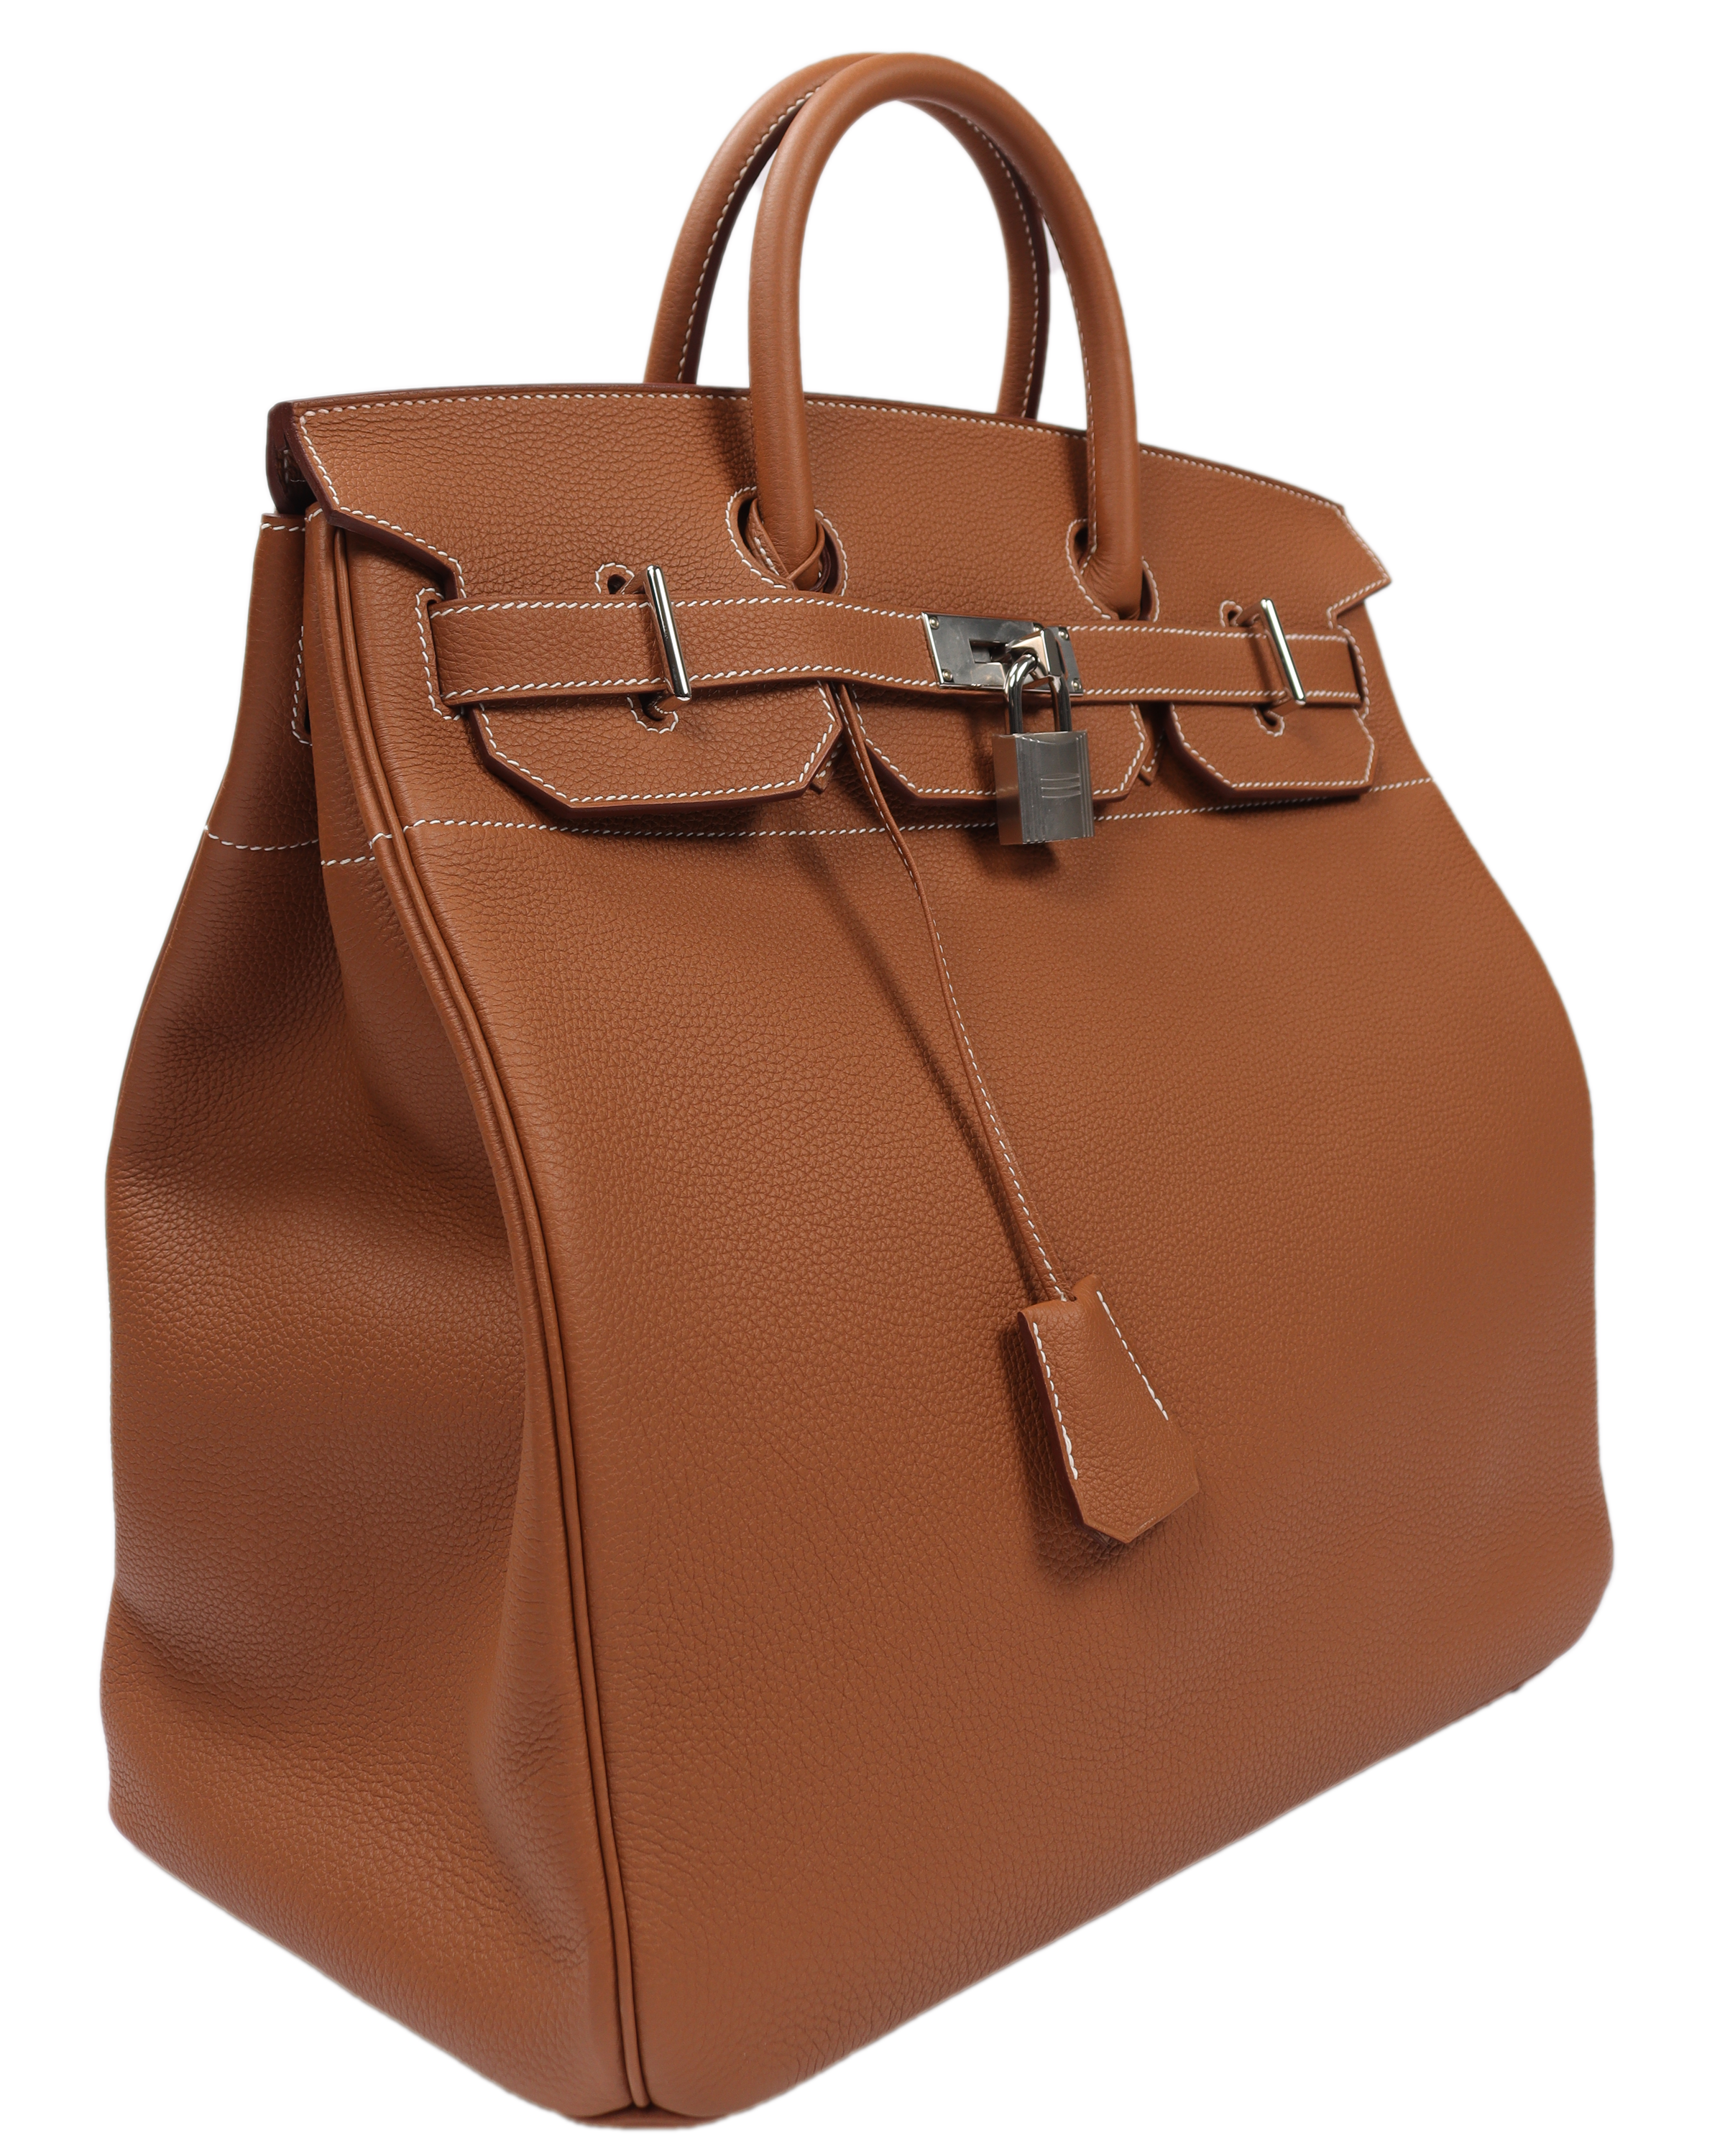 HERMES Haut a Courroies 40 Hand Bag Togo Leather Etoupe Z France 78007